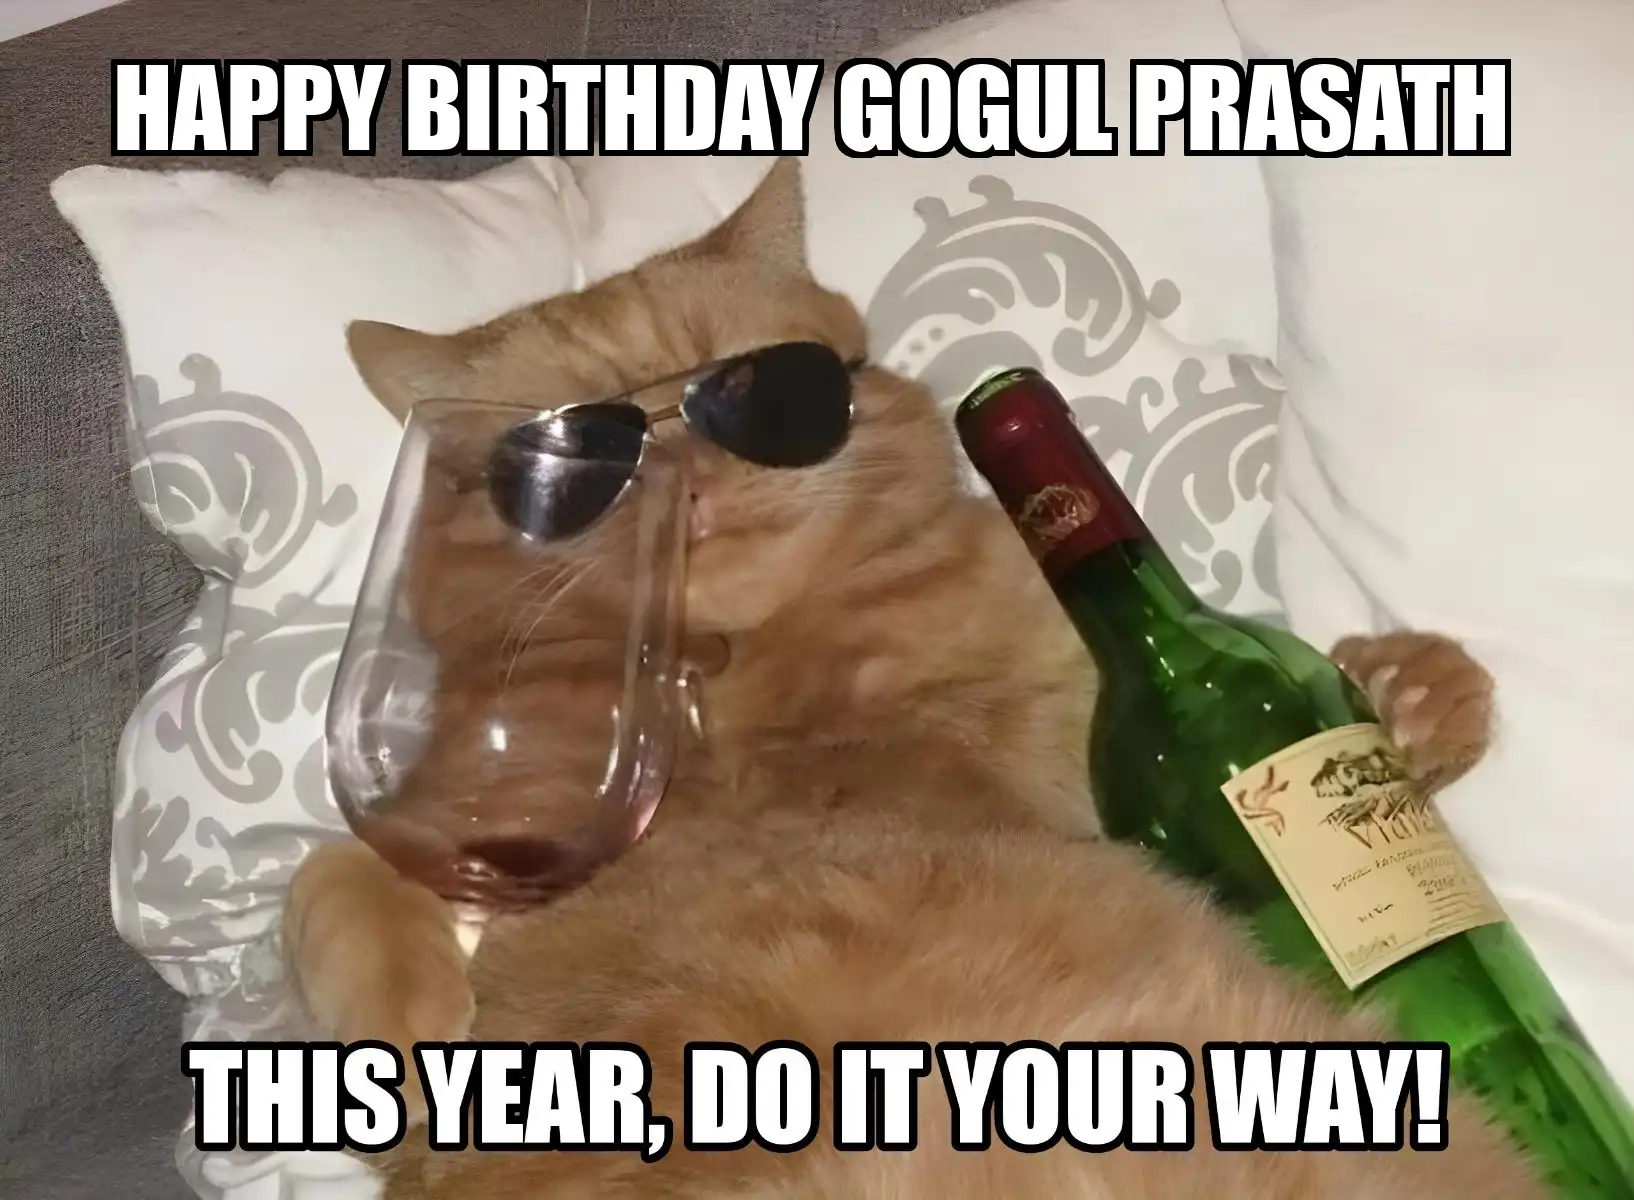 Happy Birthday Gogul prasath This Year Do It Your Way Meme